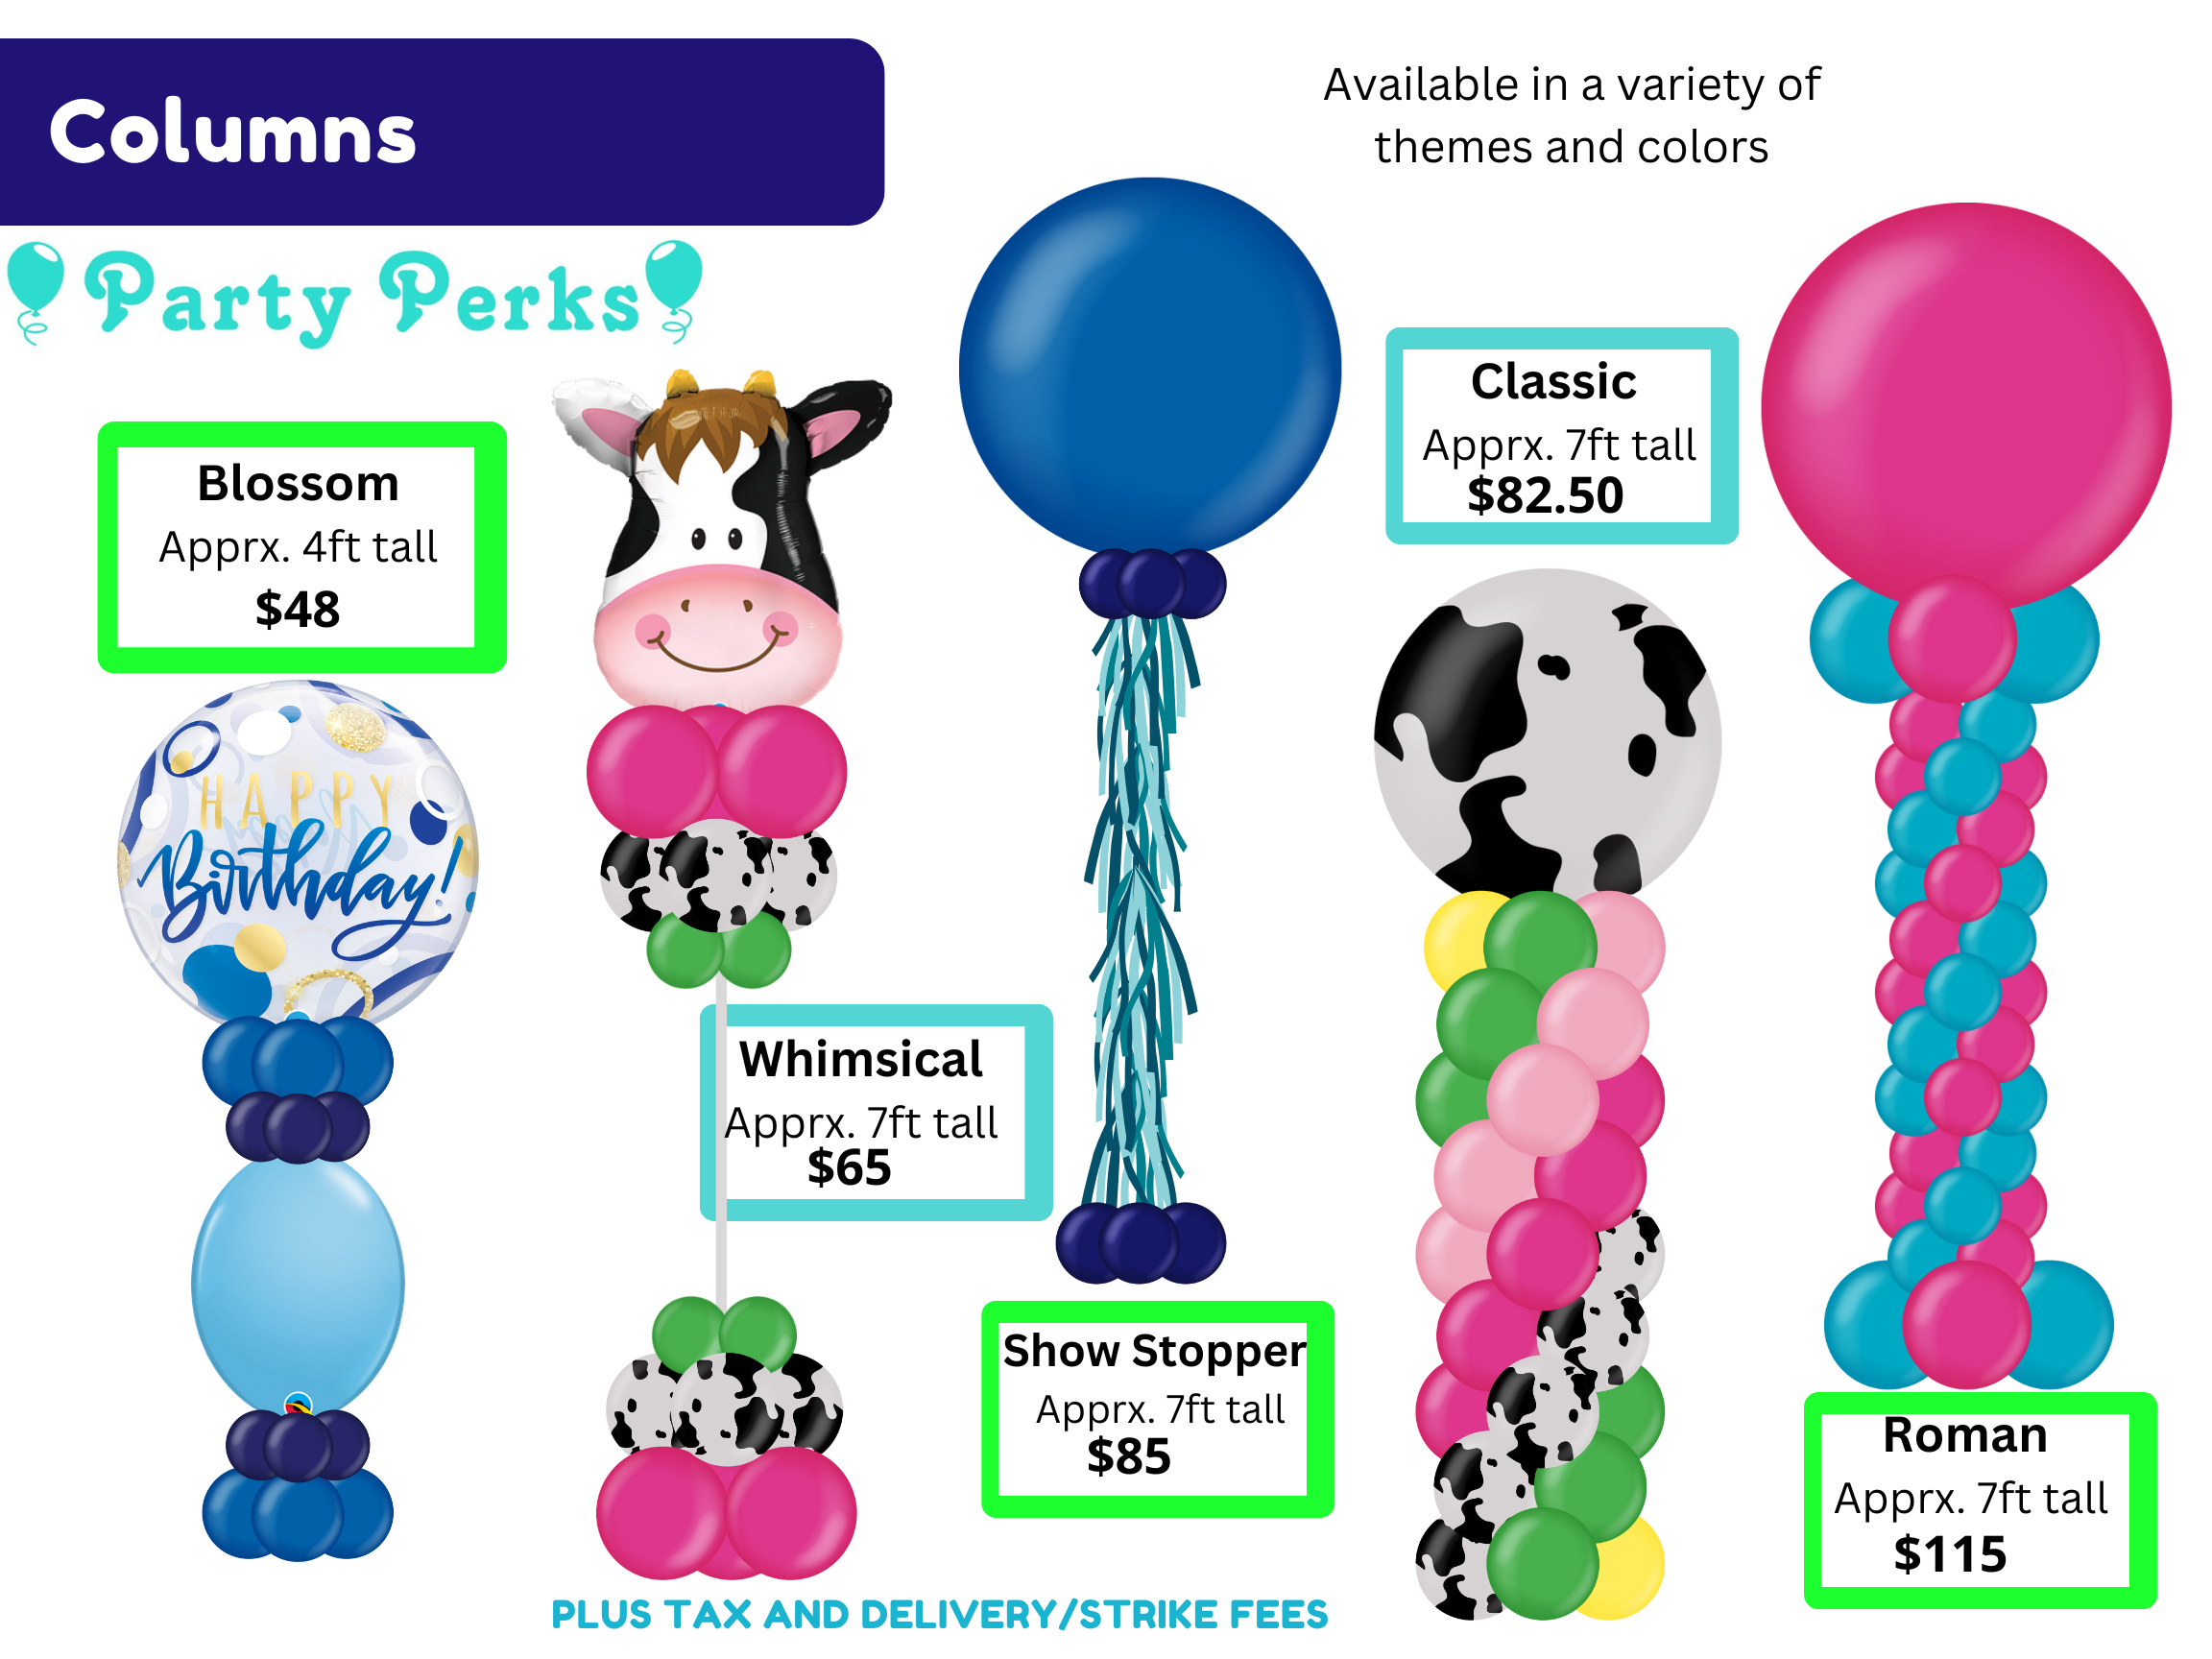 St Louis Balloon Columns Pricing